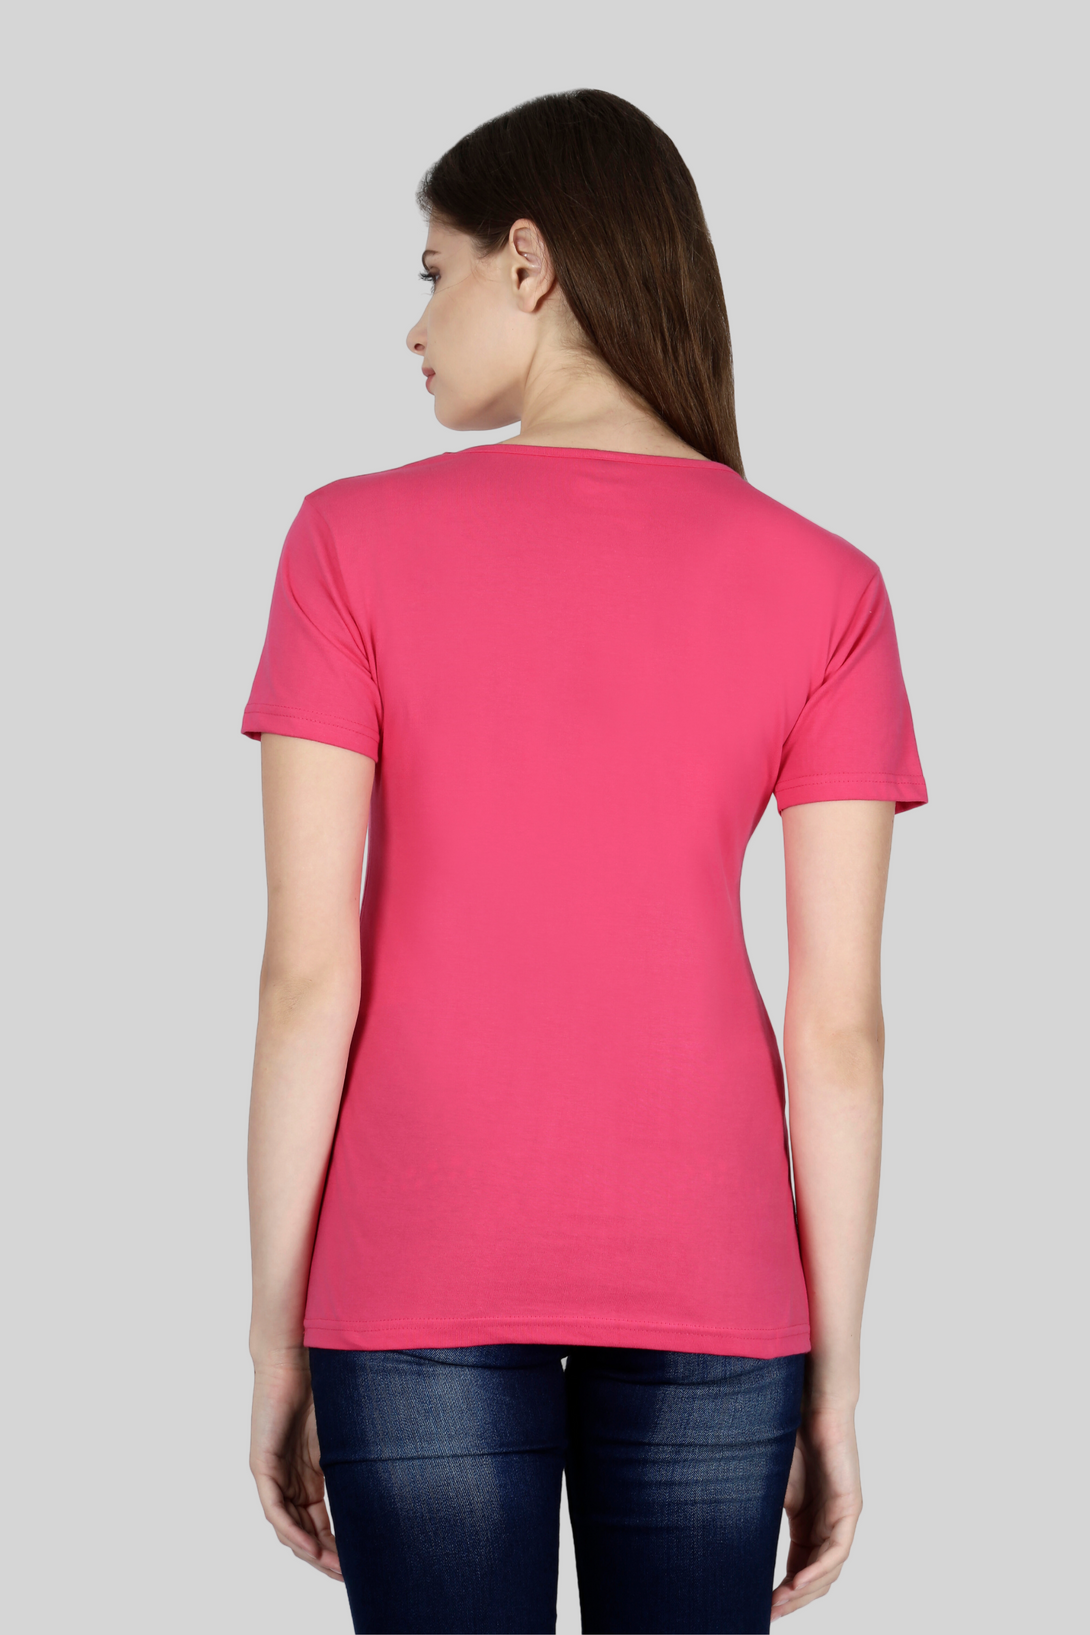 Pink Scoop Neck T-Shirt For Women - WowWaves - 5